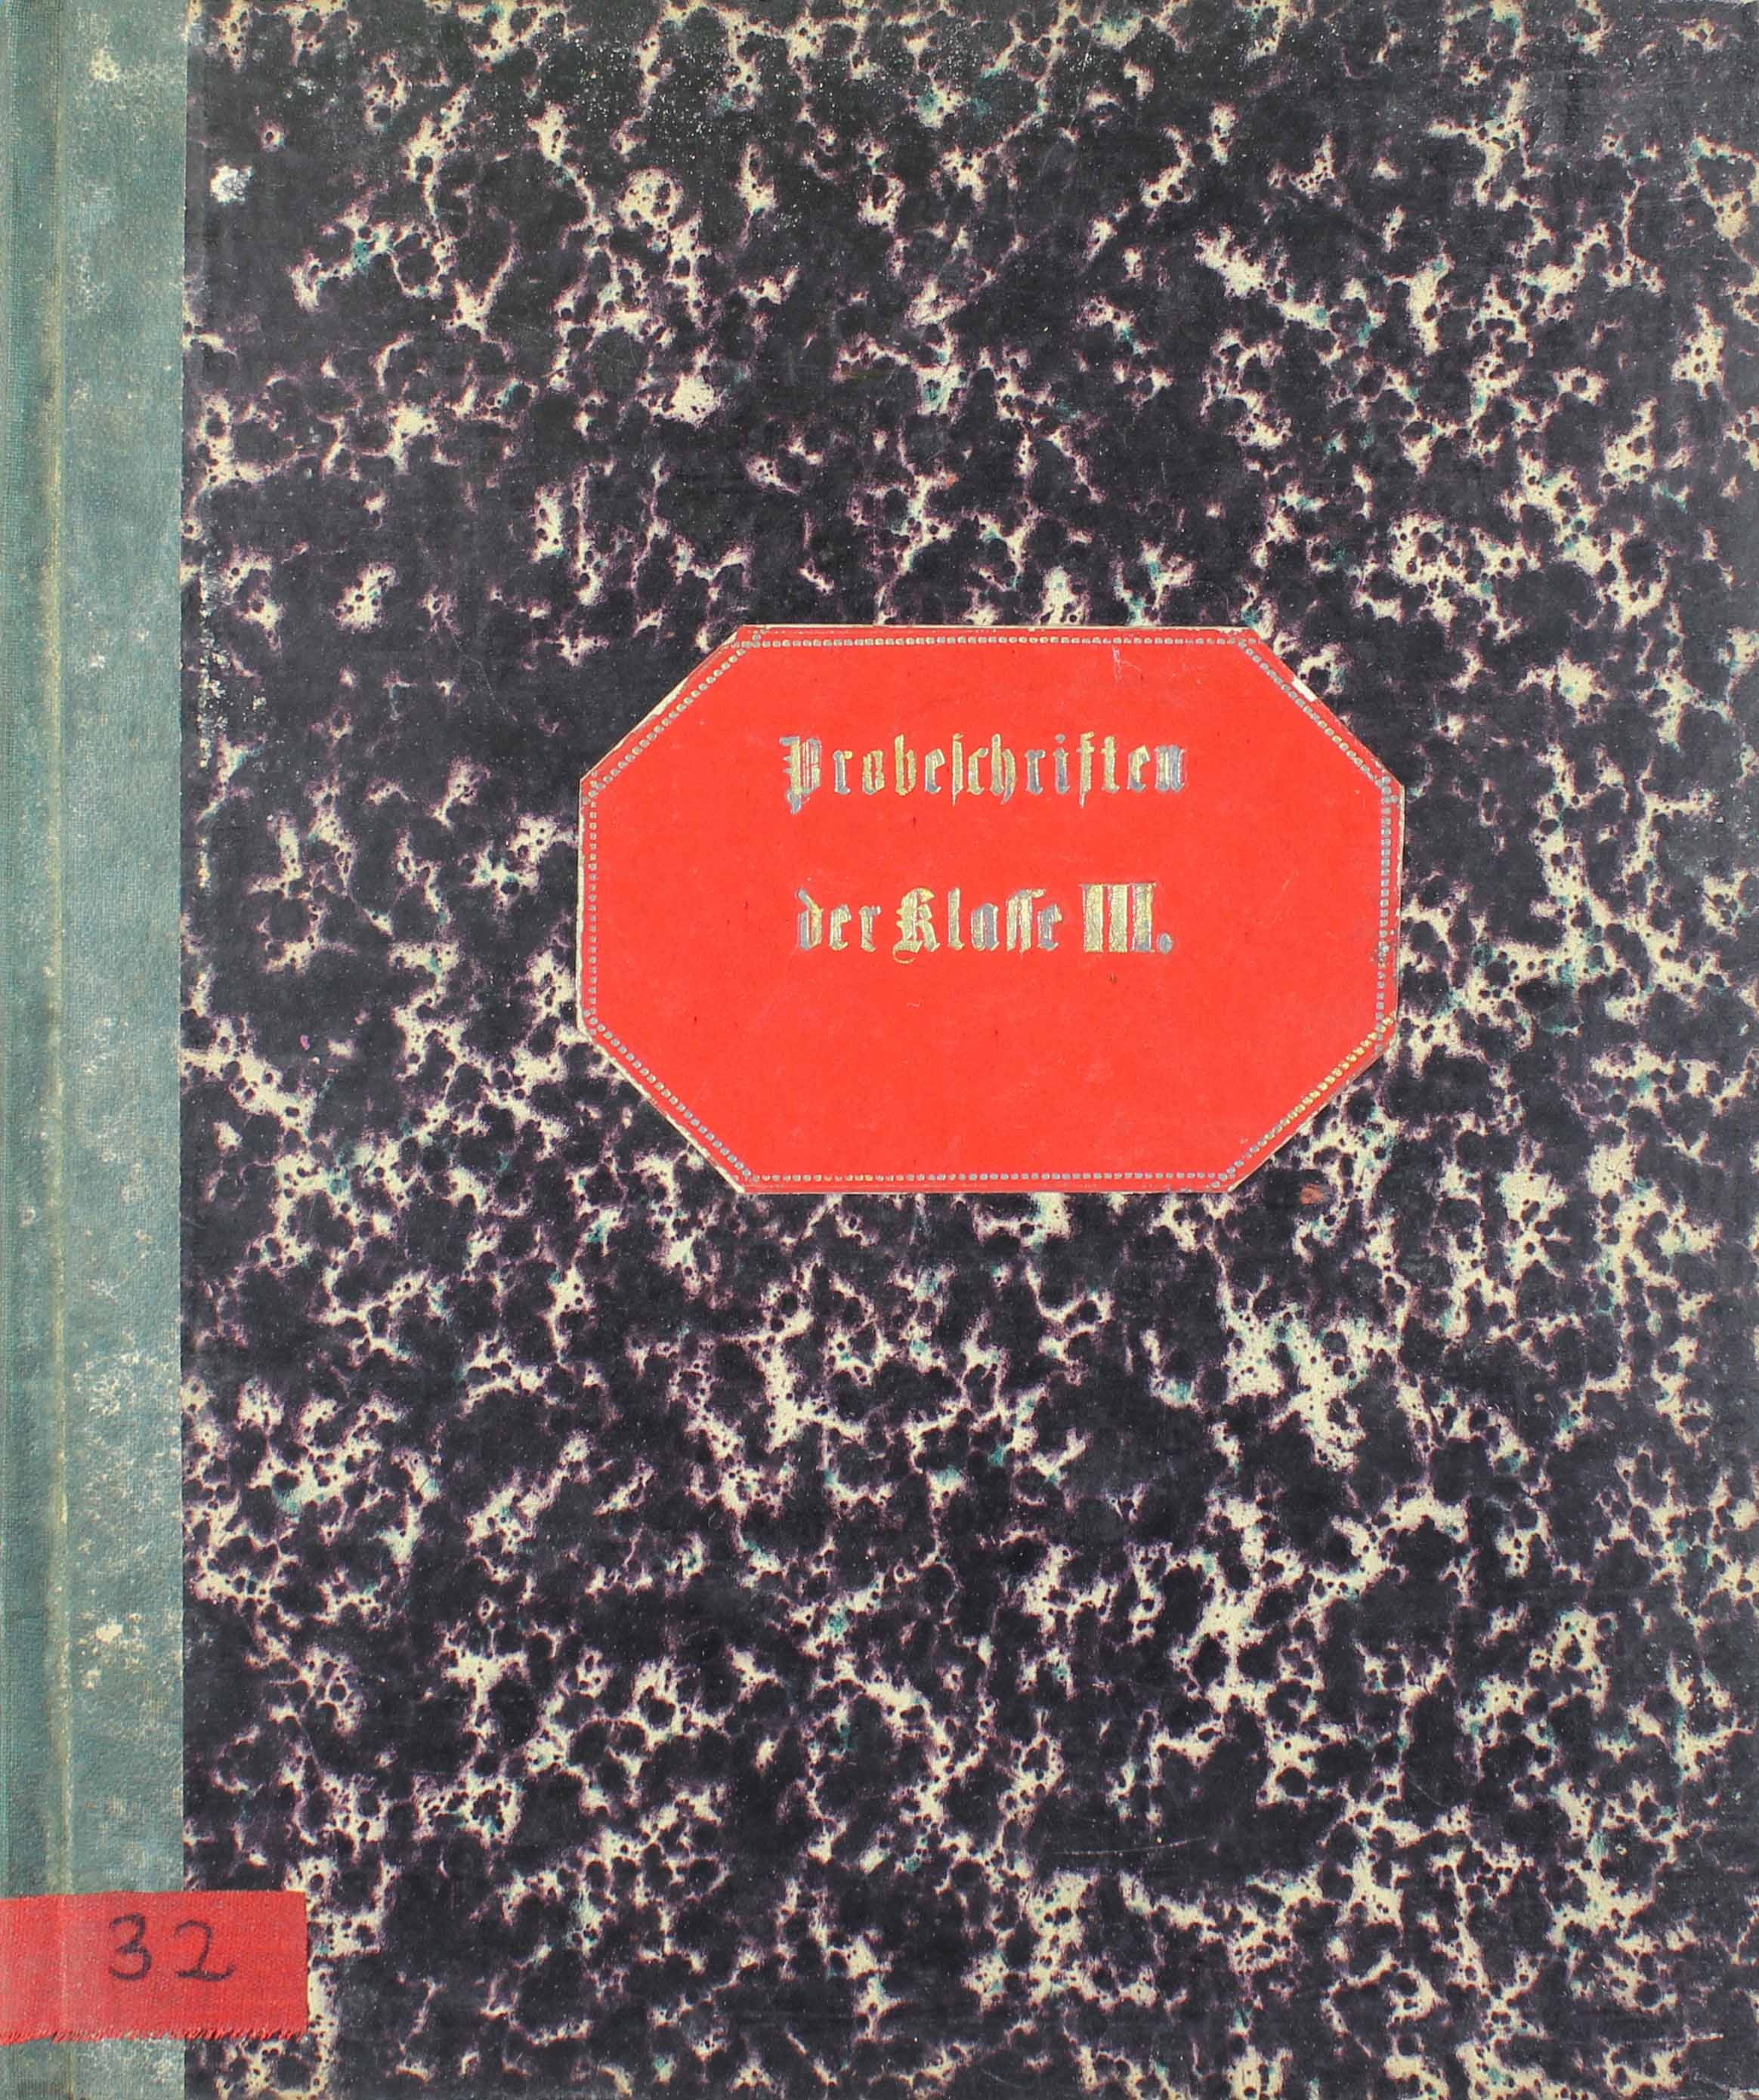 Probeschriften 3. Klasse (Museum Wolmirstedt RR-F)